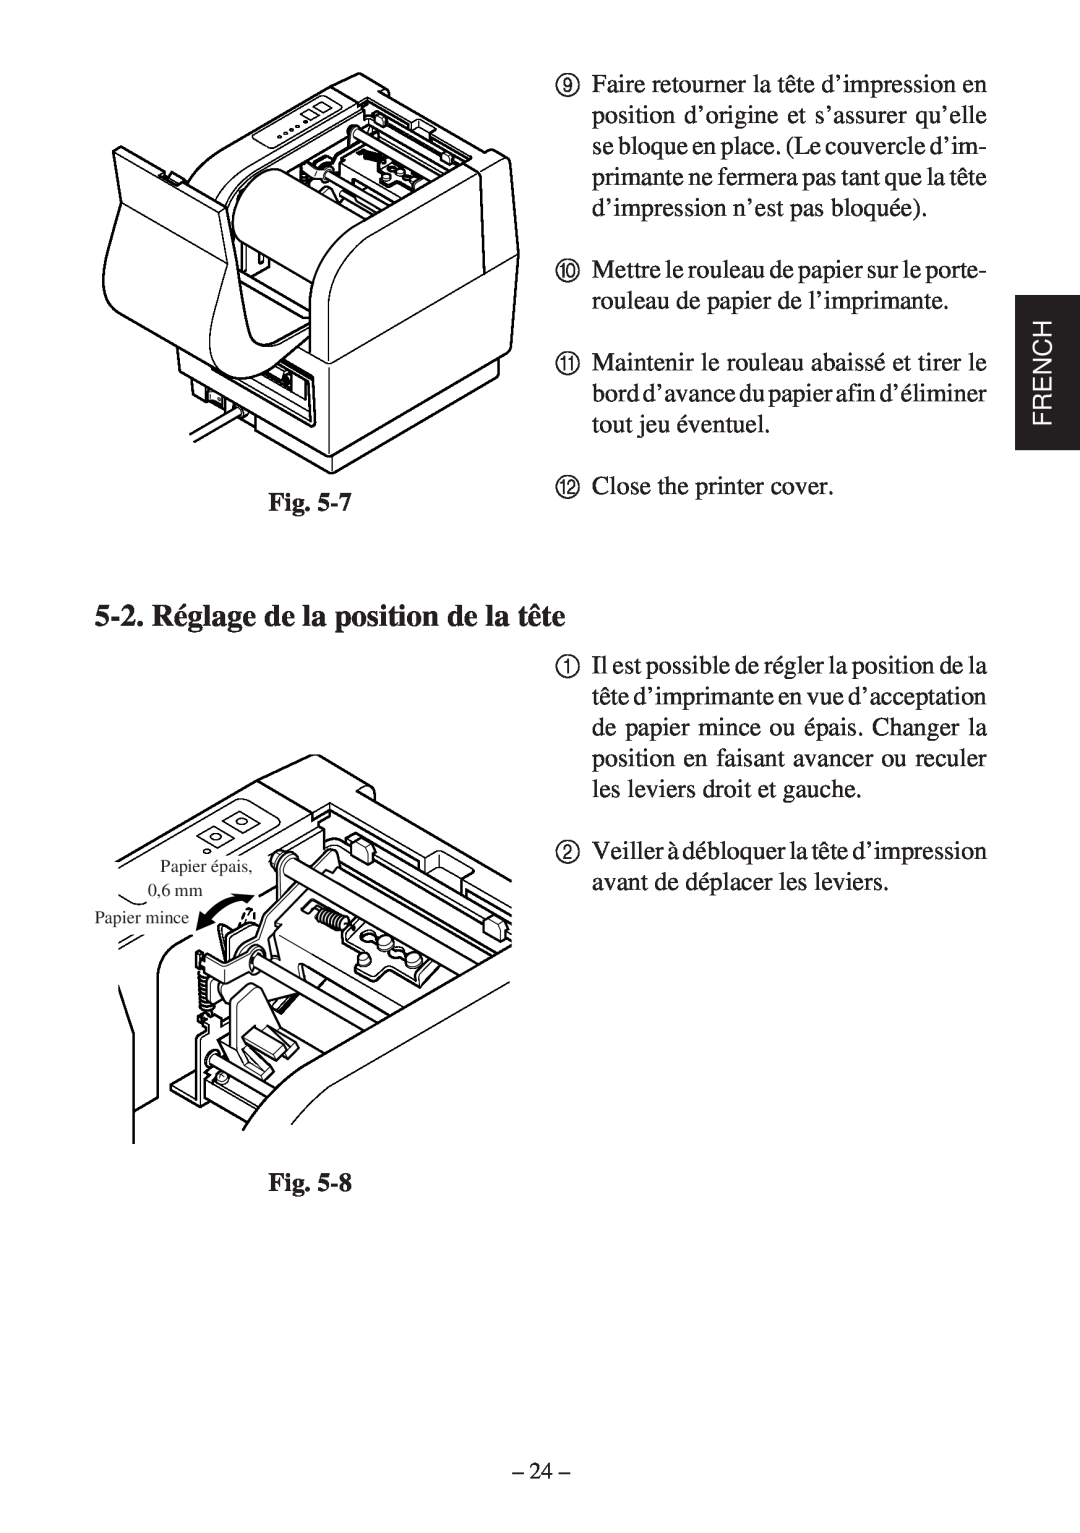 Star Micronics TSP400Z Series user manual 5-2. Réglage de la position de la tête, French 